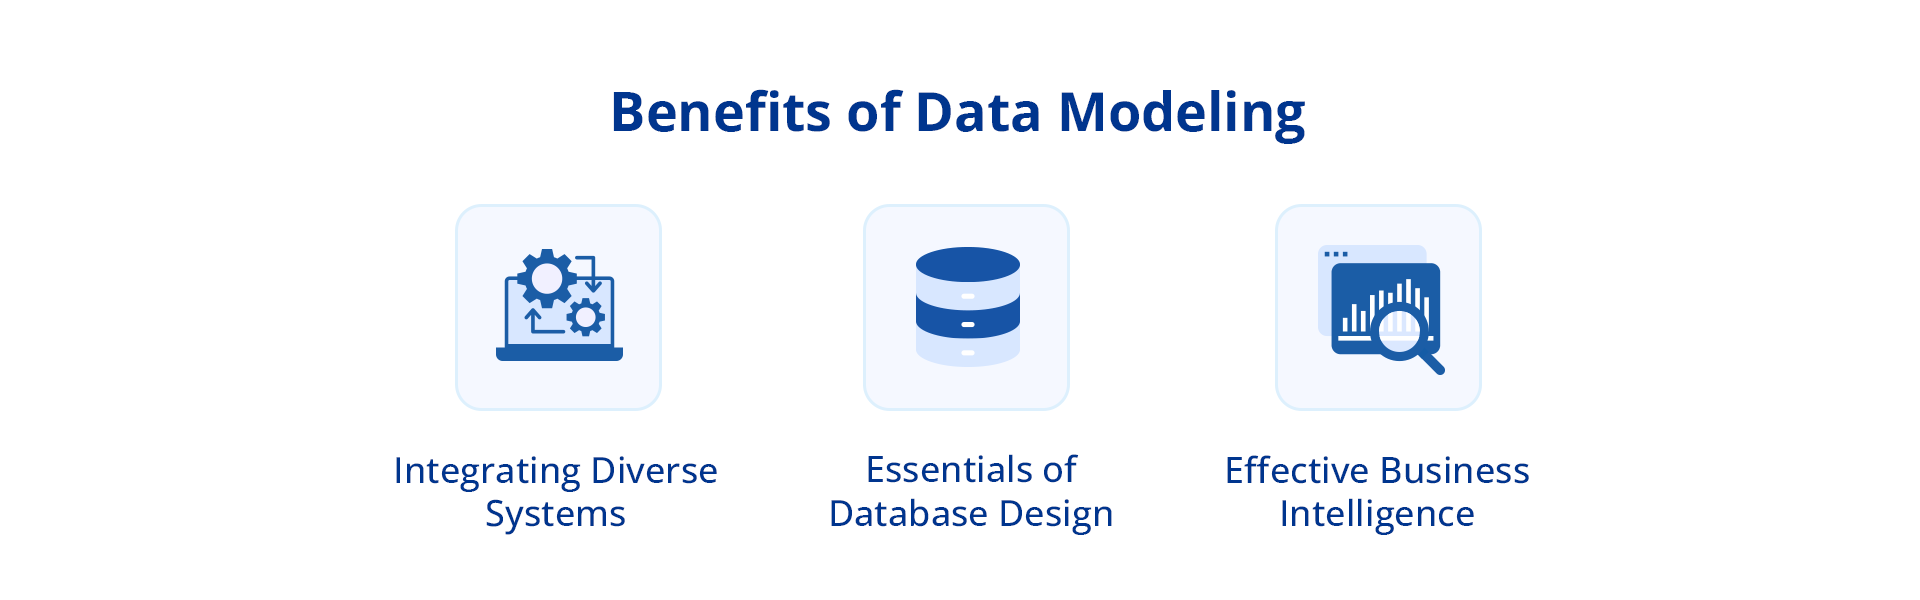 Illustration Showing Benefits of Data Modeling 